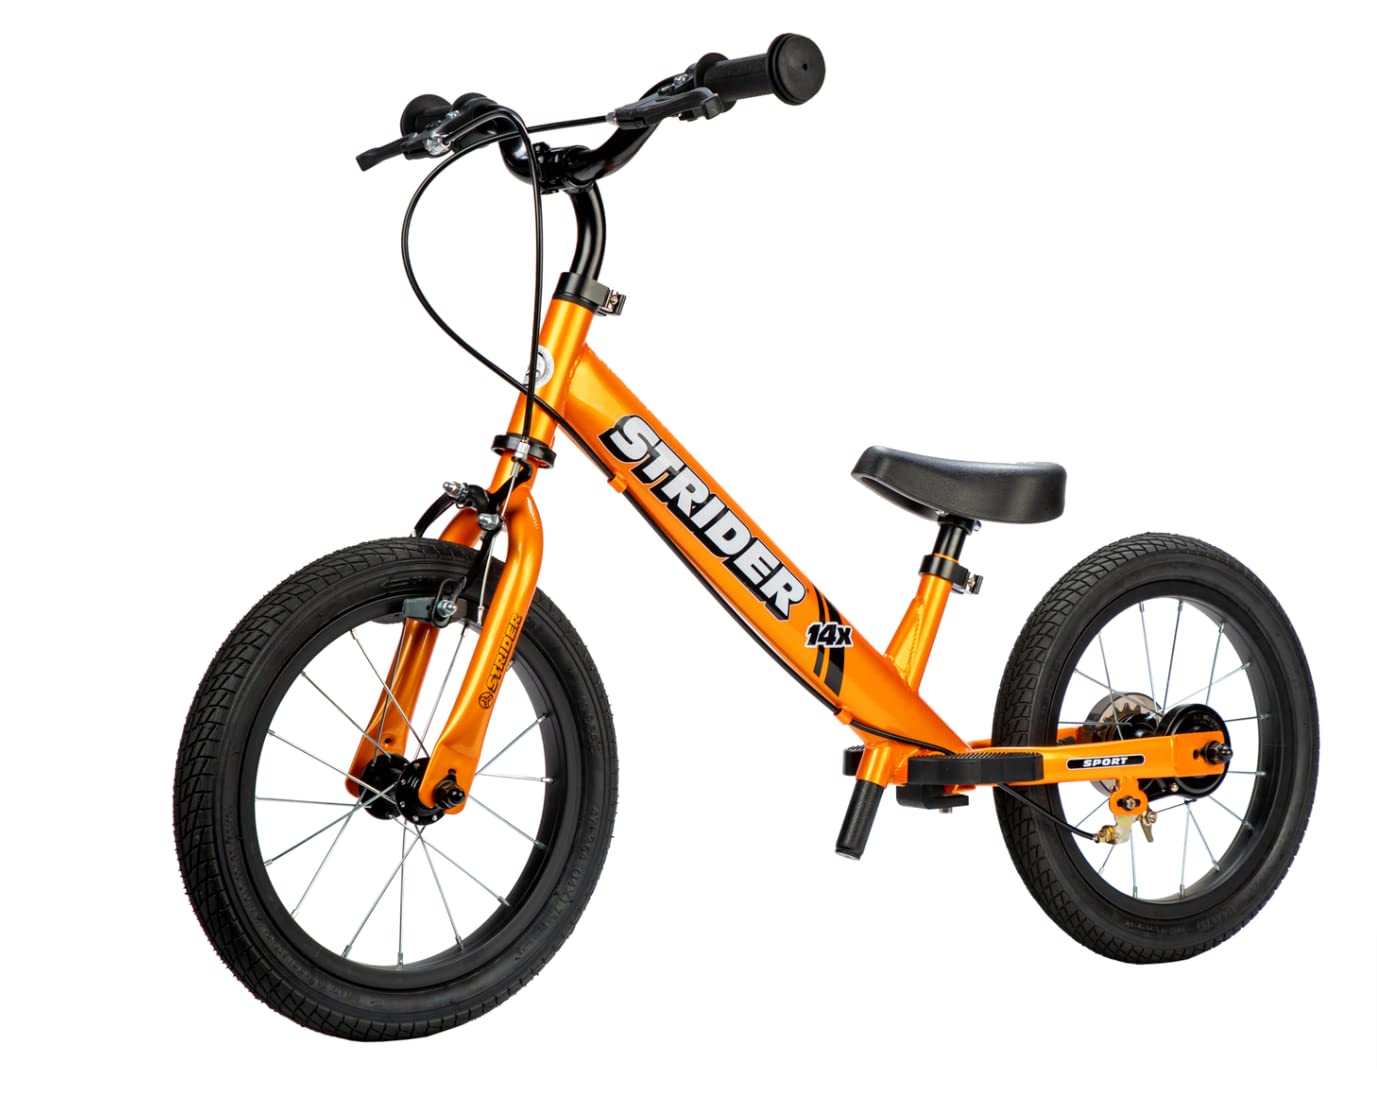 Strider 14x - Balance Bike for Kids 3 to 7 Years